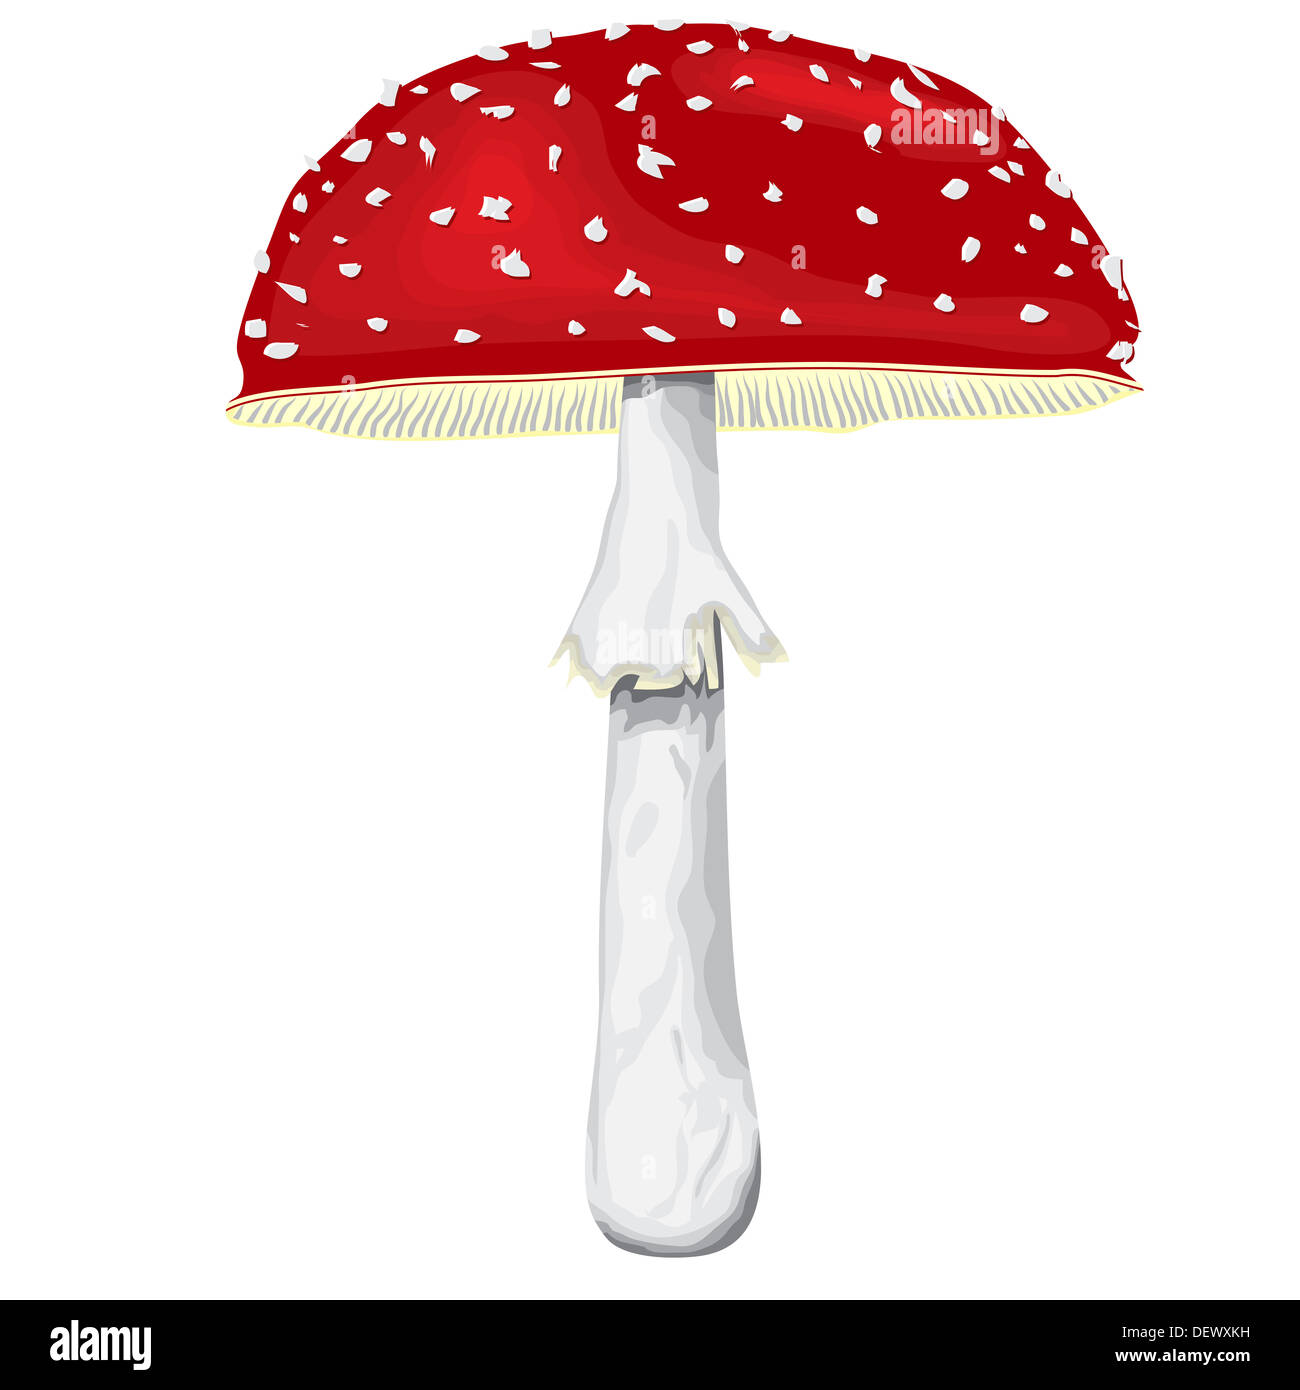 Illustration of mushroom amanita with cap and leg. Stock Photo